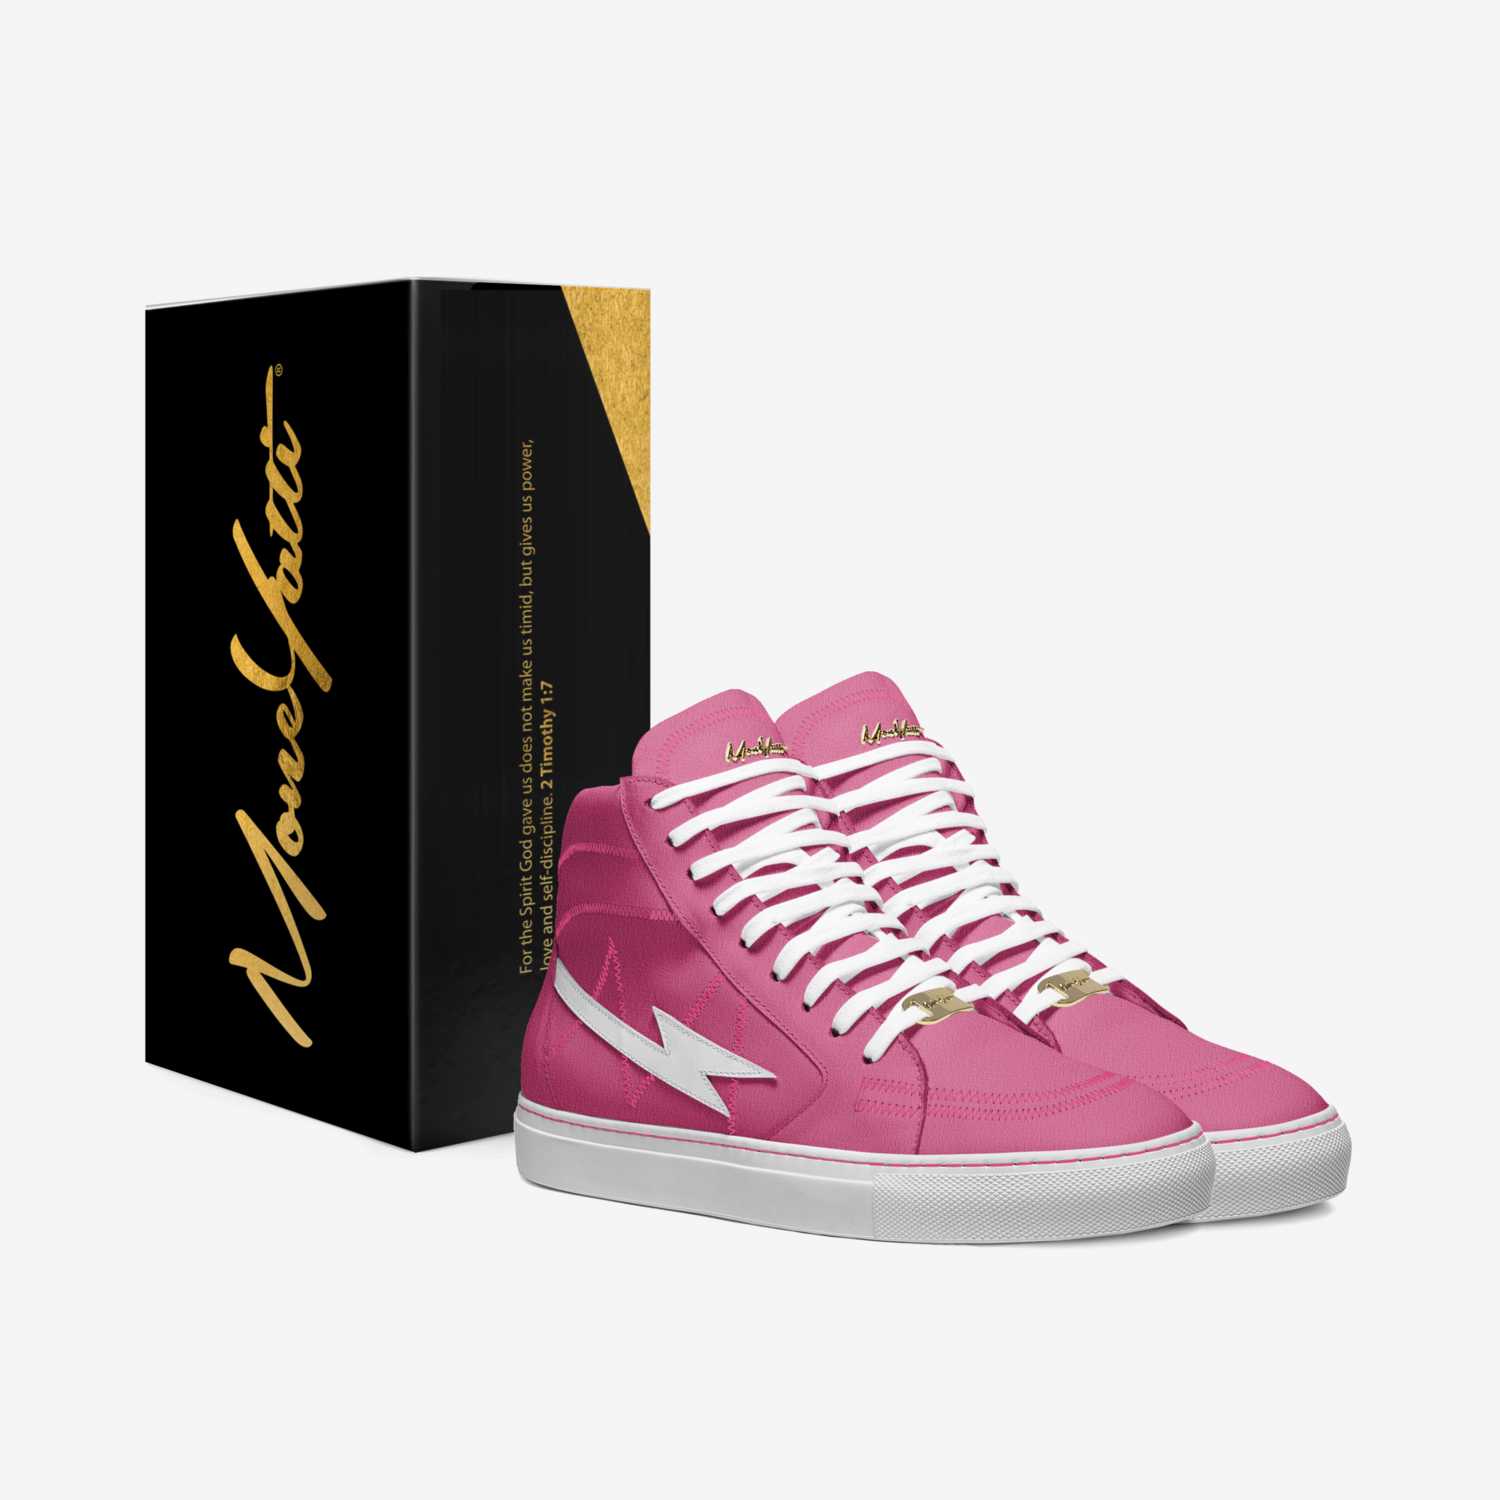 MONEYATTI REBEL 06 custom made in Italy shoes by Moneyatti Brand | Box view